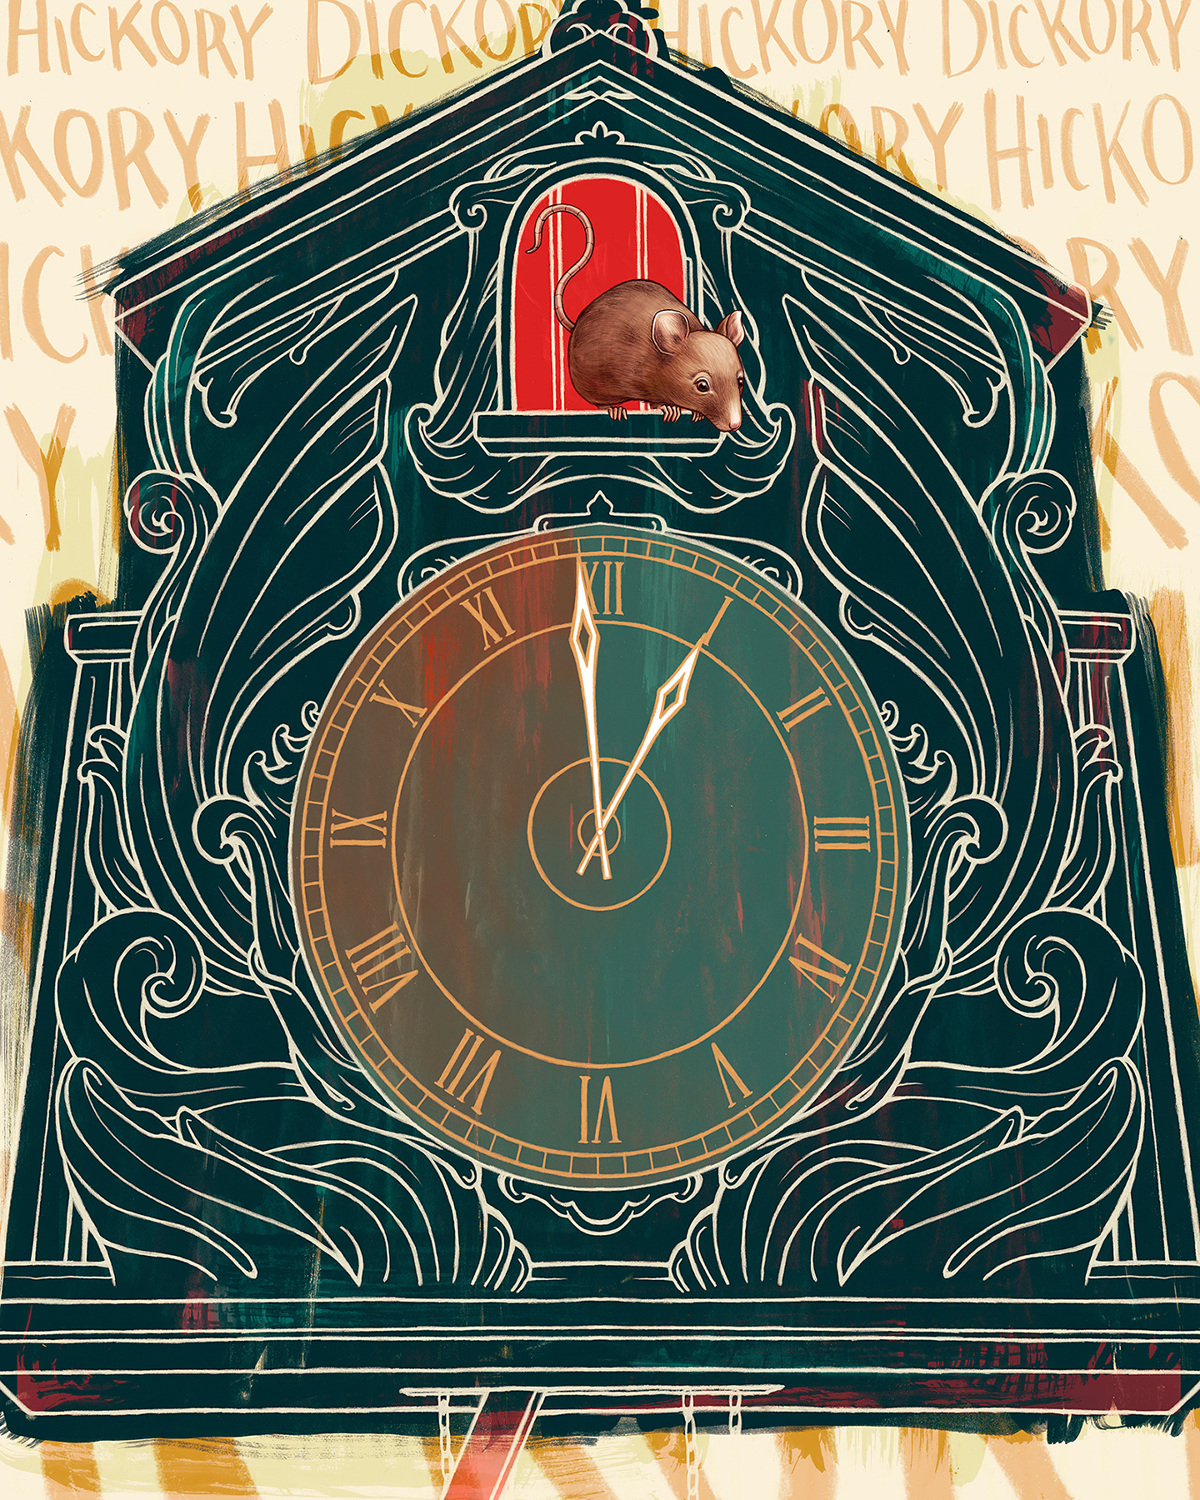 ilustracion editorial de un reloj de pared con un raton kate-ohara